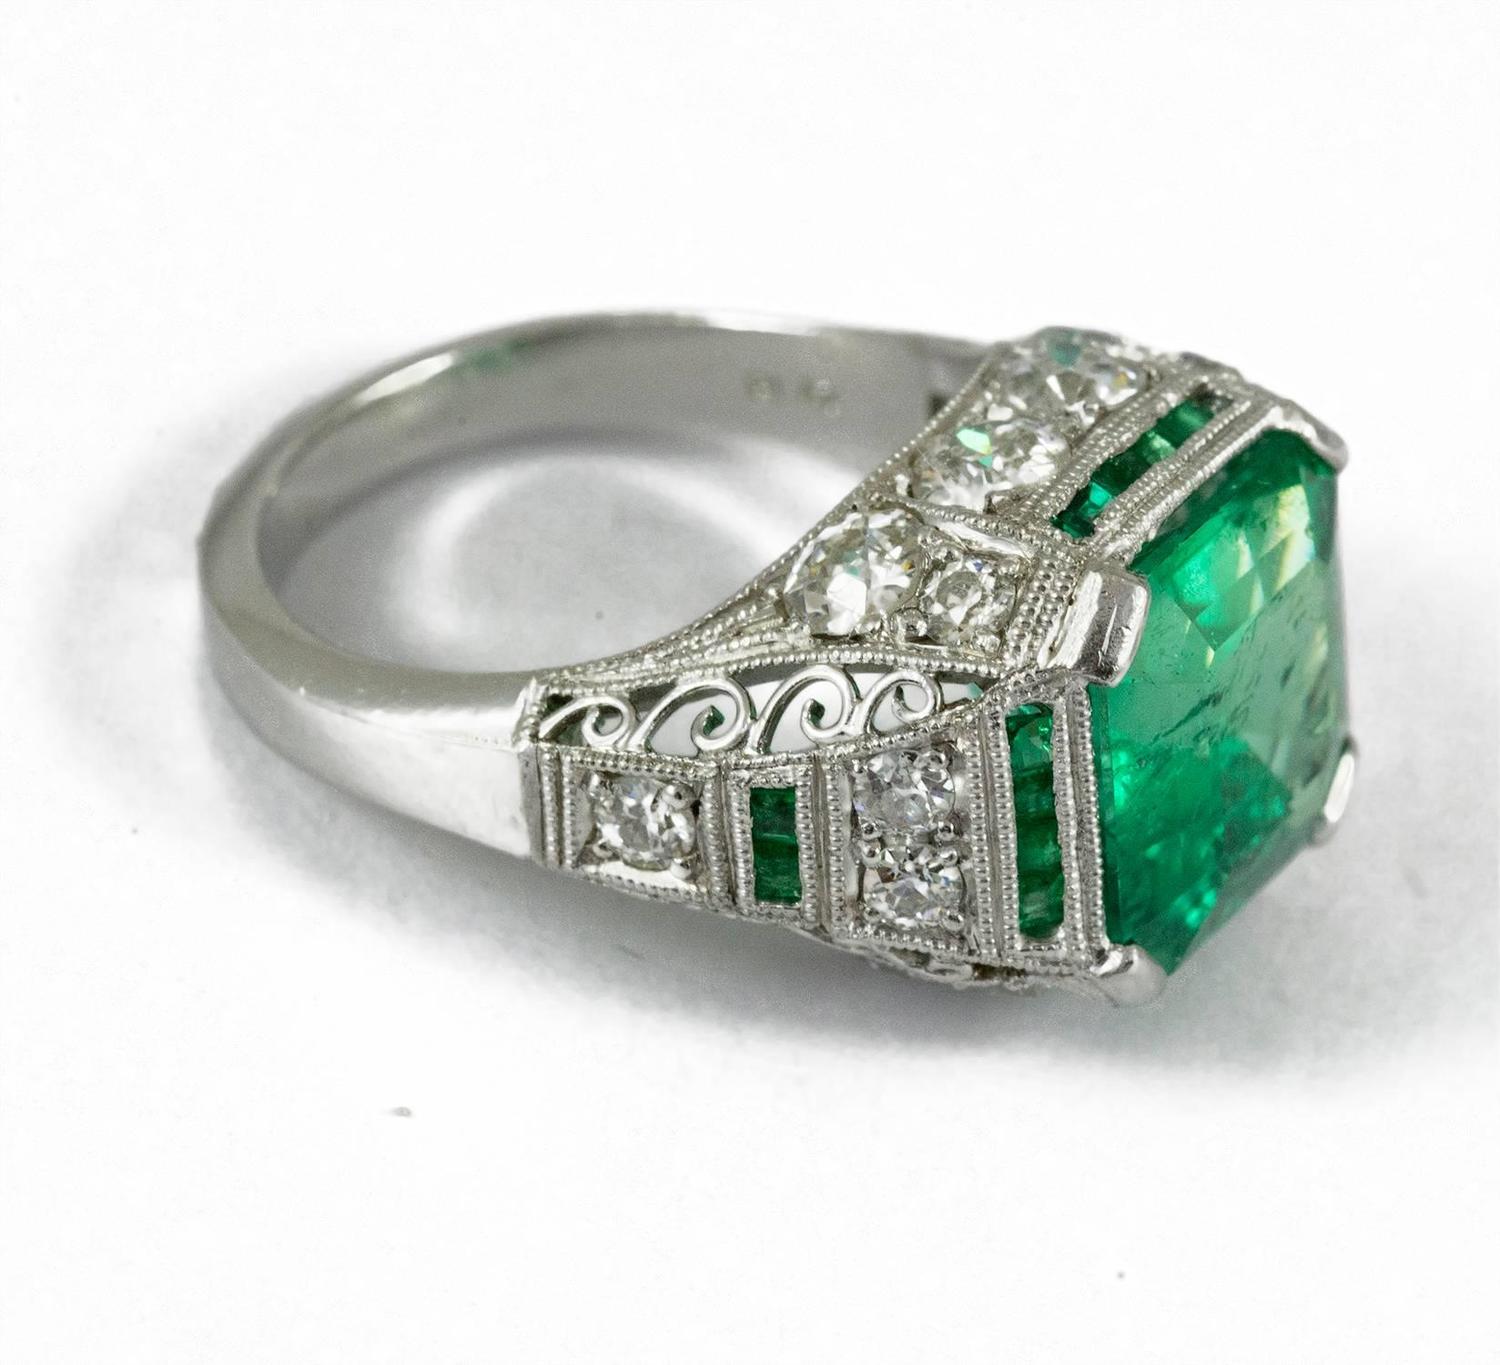 Exceptional Art Deco Emerald Diamond Platinum Ring at 1stdibs